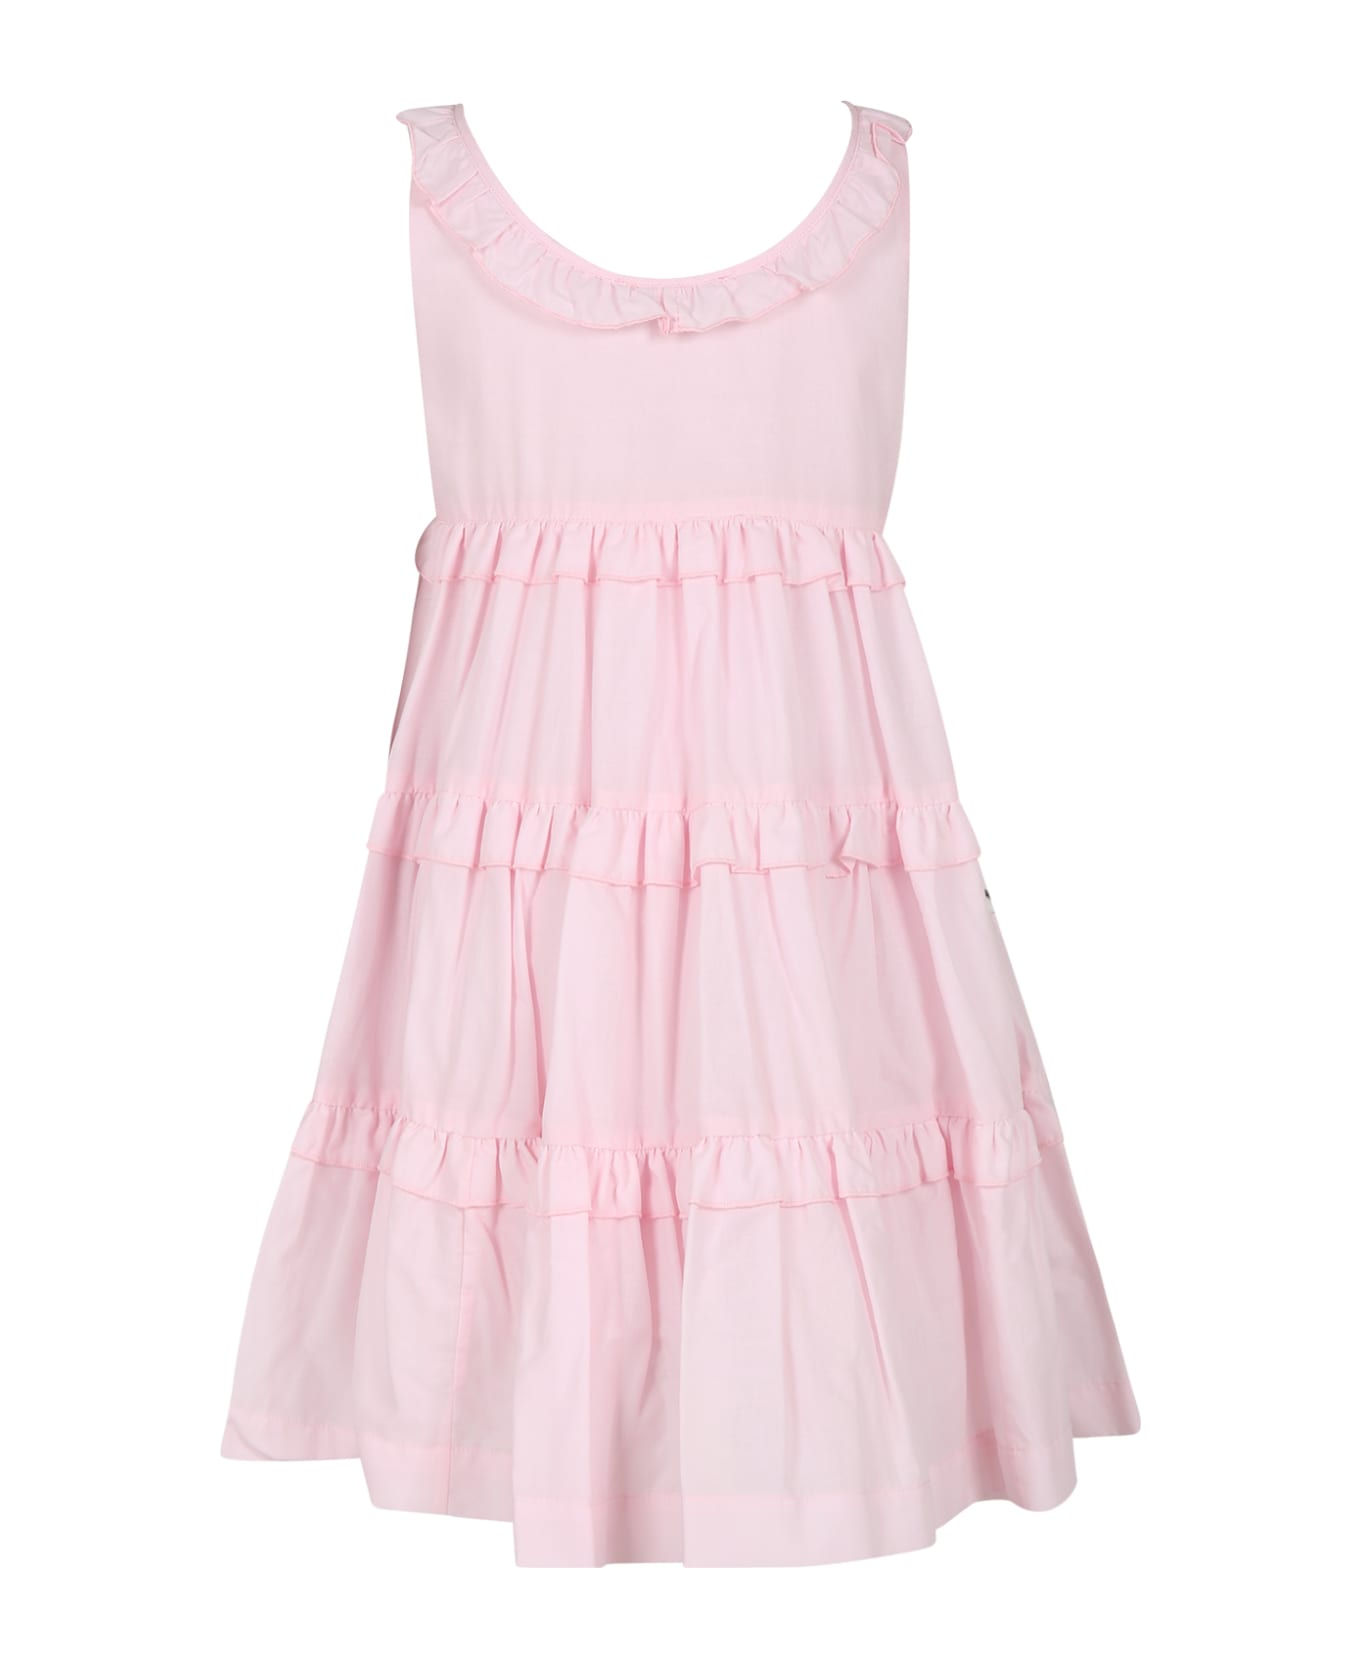 Monnalisa Pink Dress For Girl - Pink